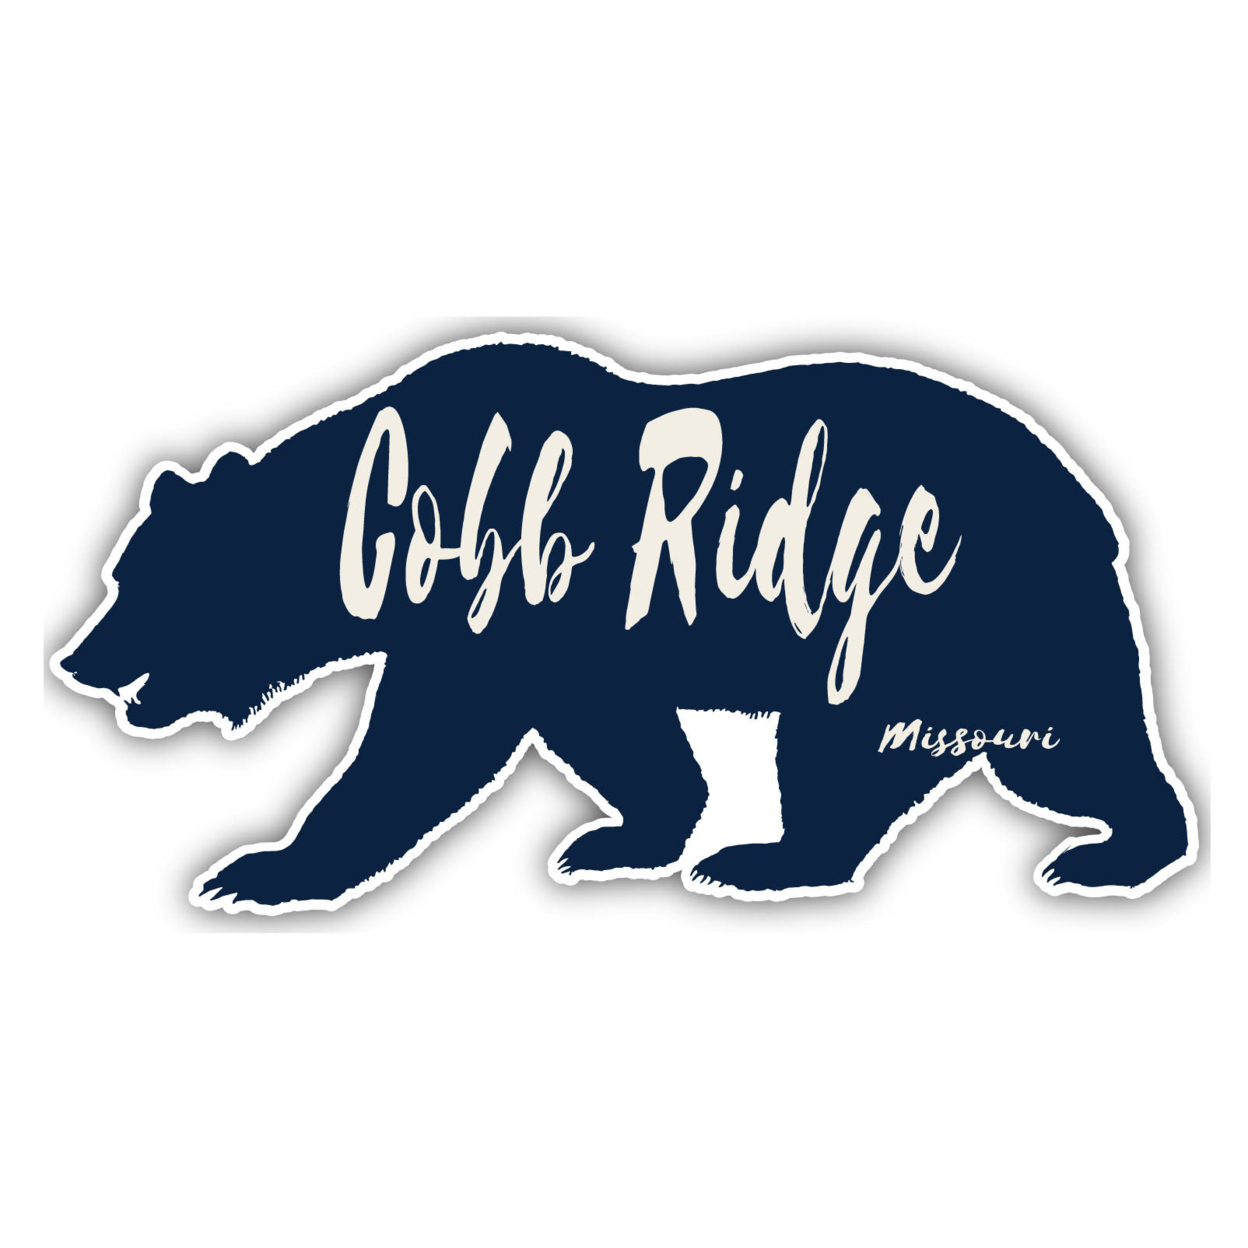 Cobb Ridge Missouri Souvenir Decorative Stickers (Choose Theme And Size) - 4-Pack, 12-Inch, Bear